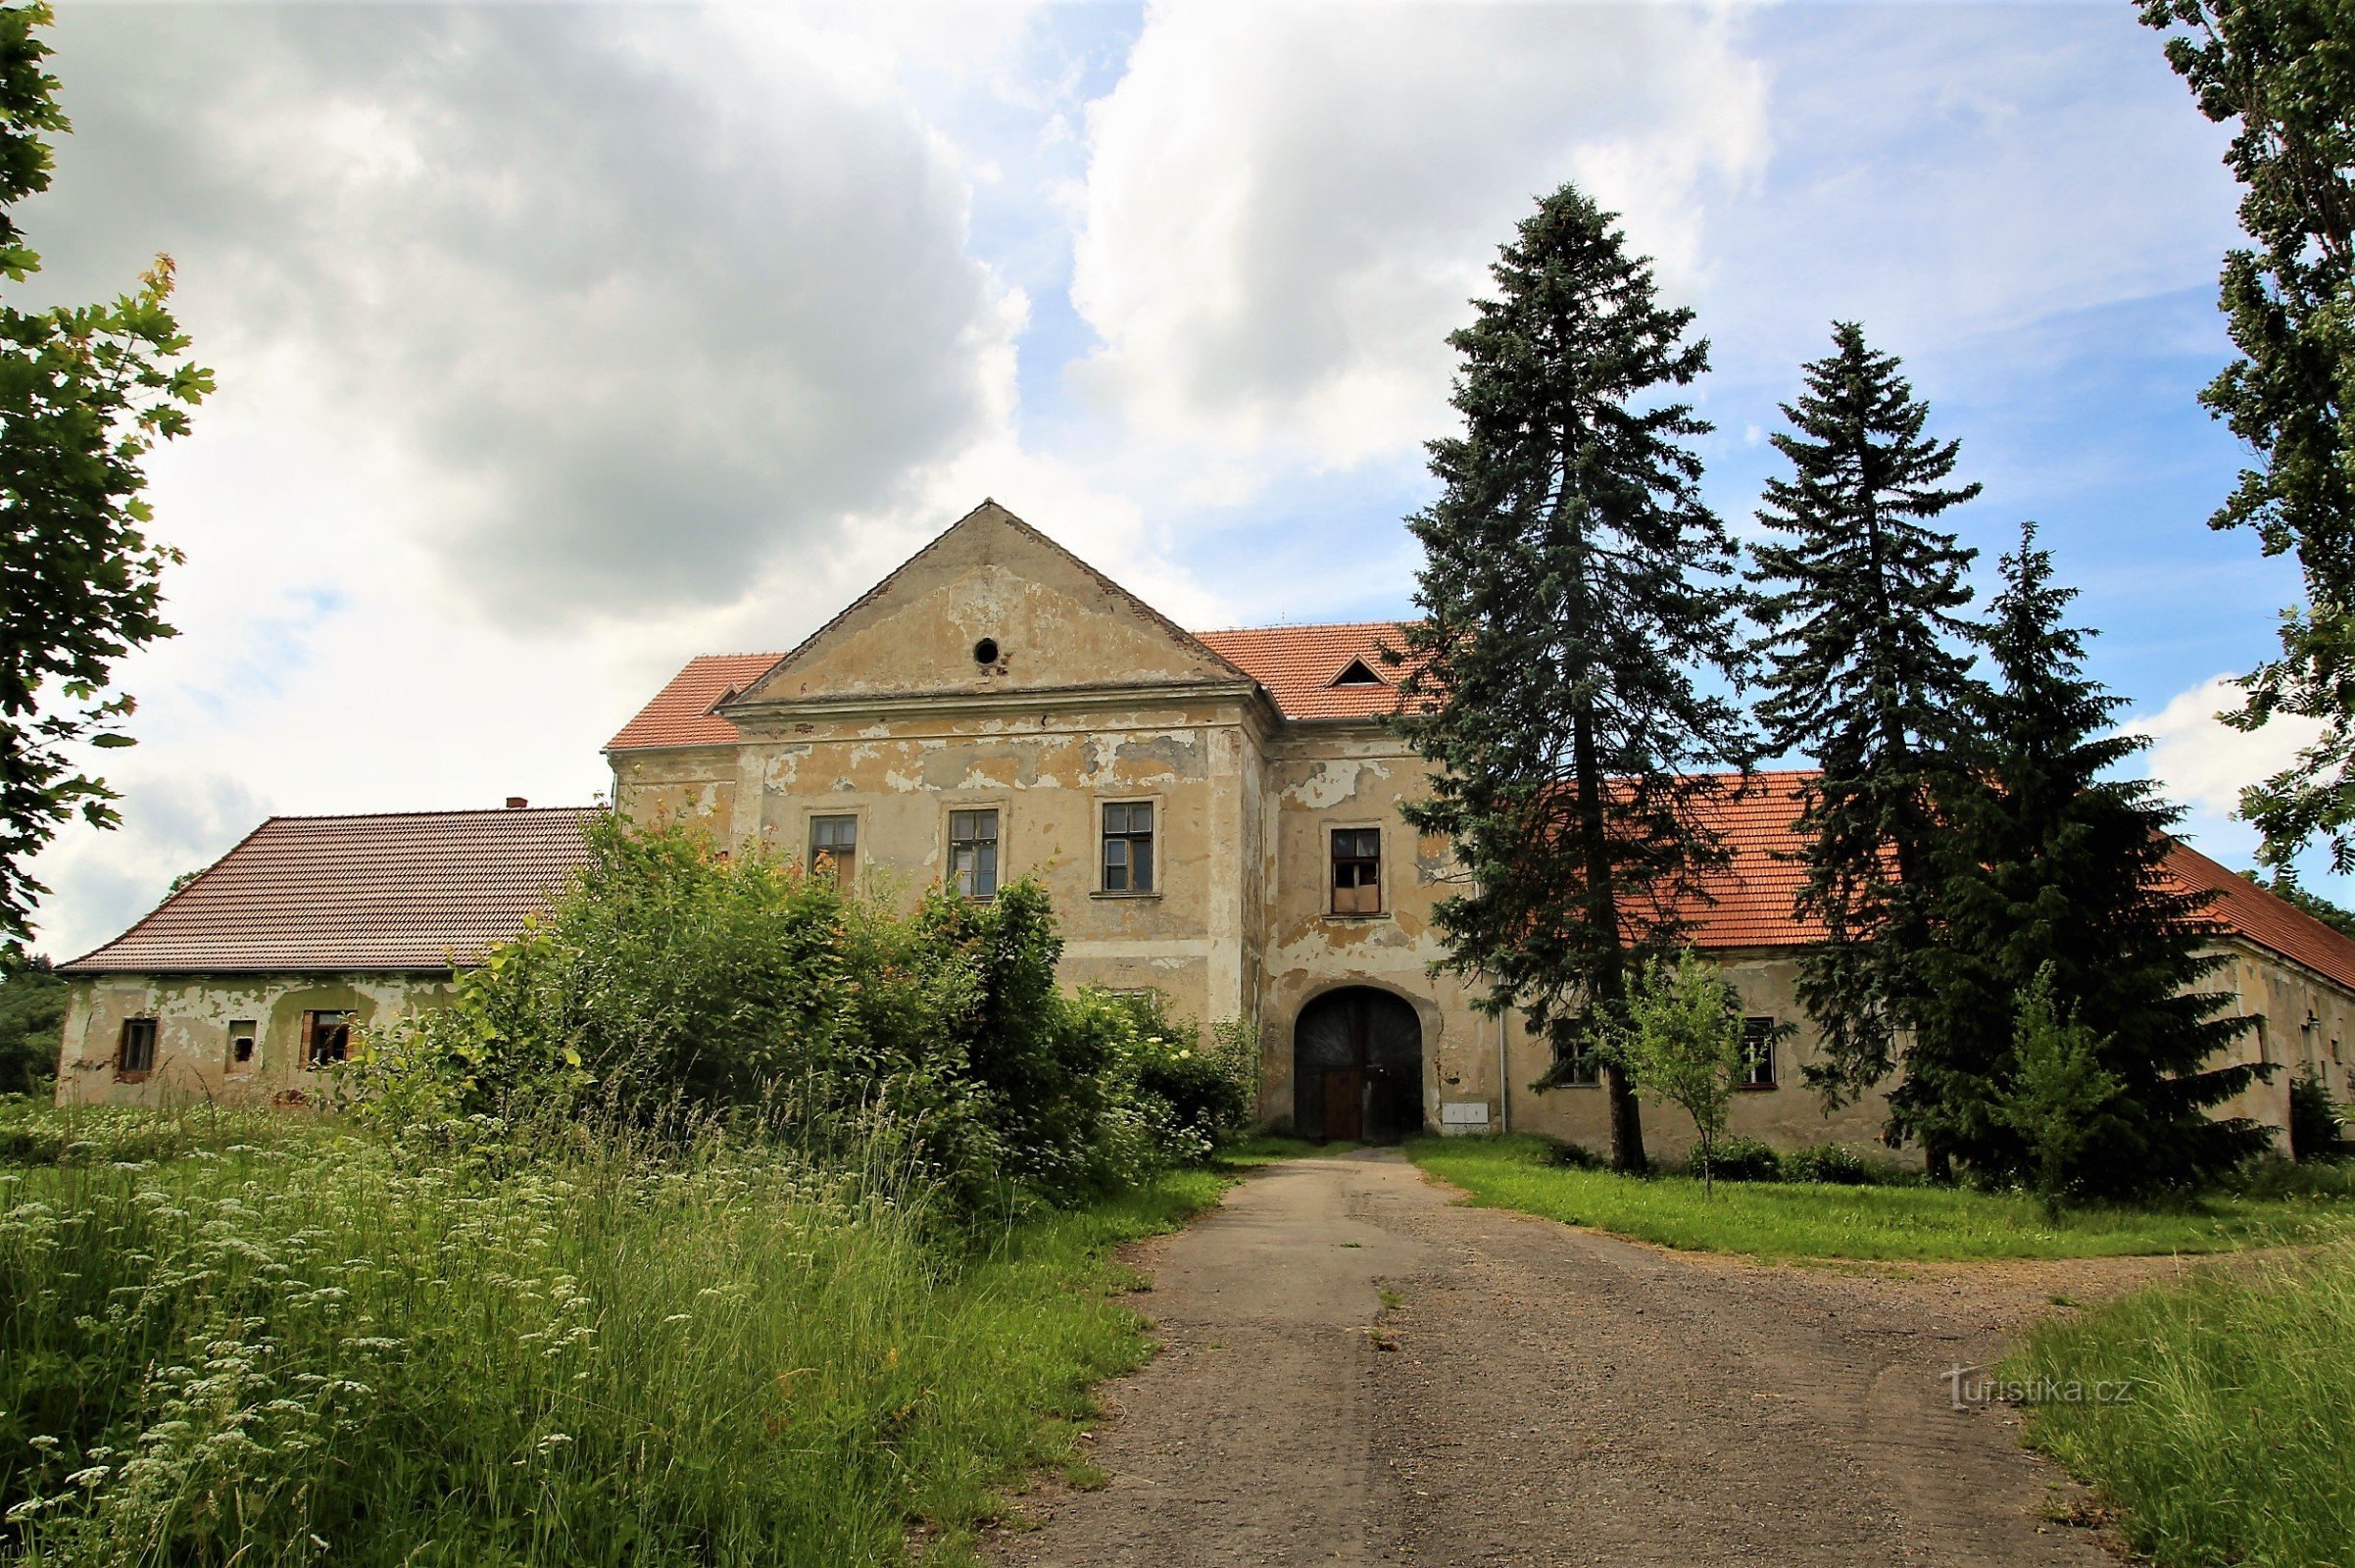 Lamberk Castle from the main access road